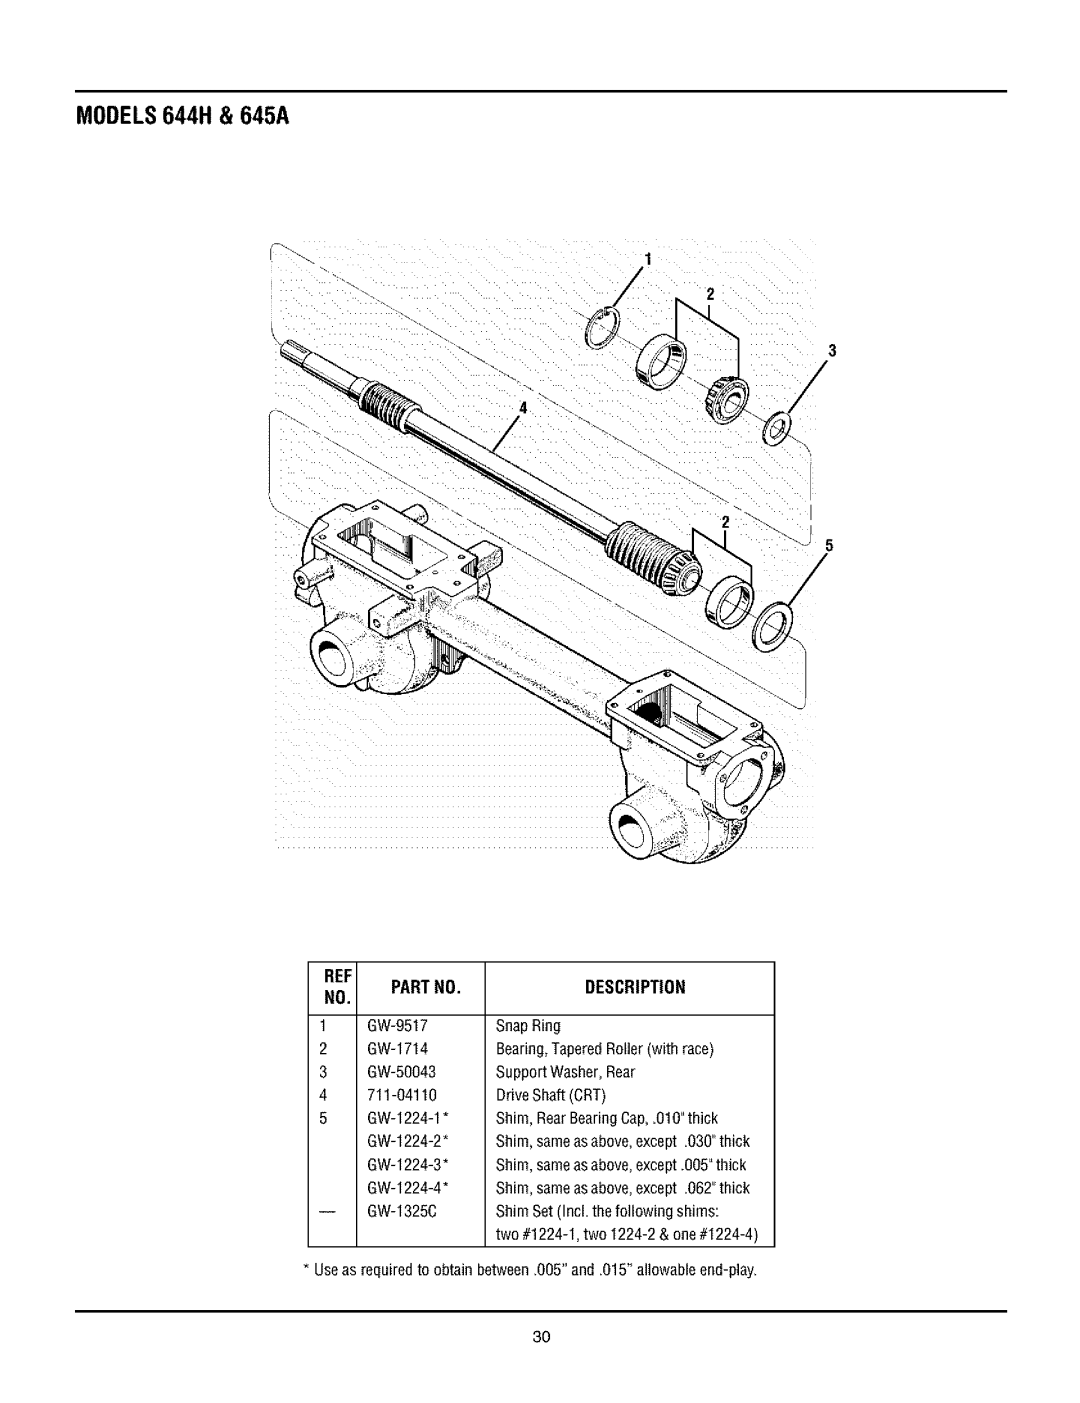 Troy-Bilt manual MODELS644H & 645A, Partno, Description 